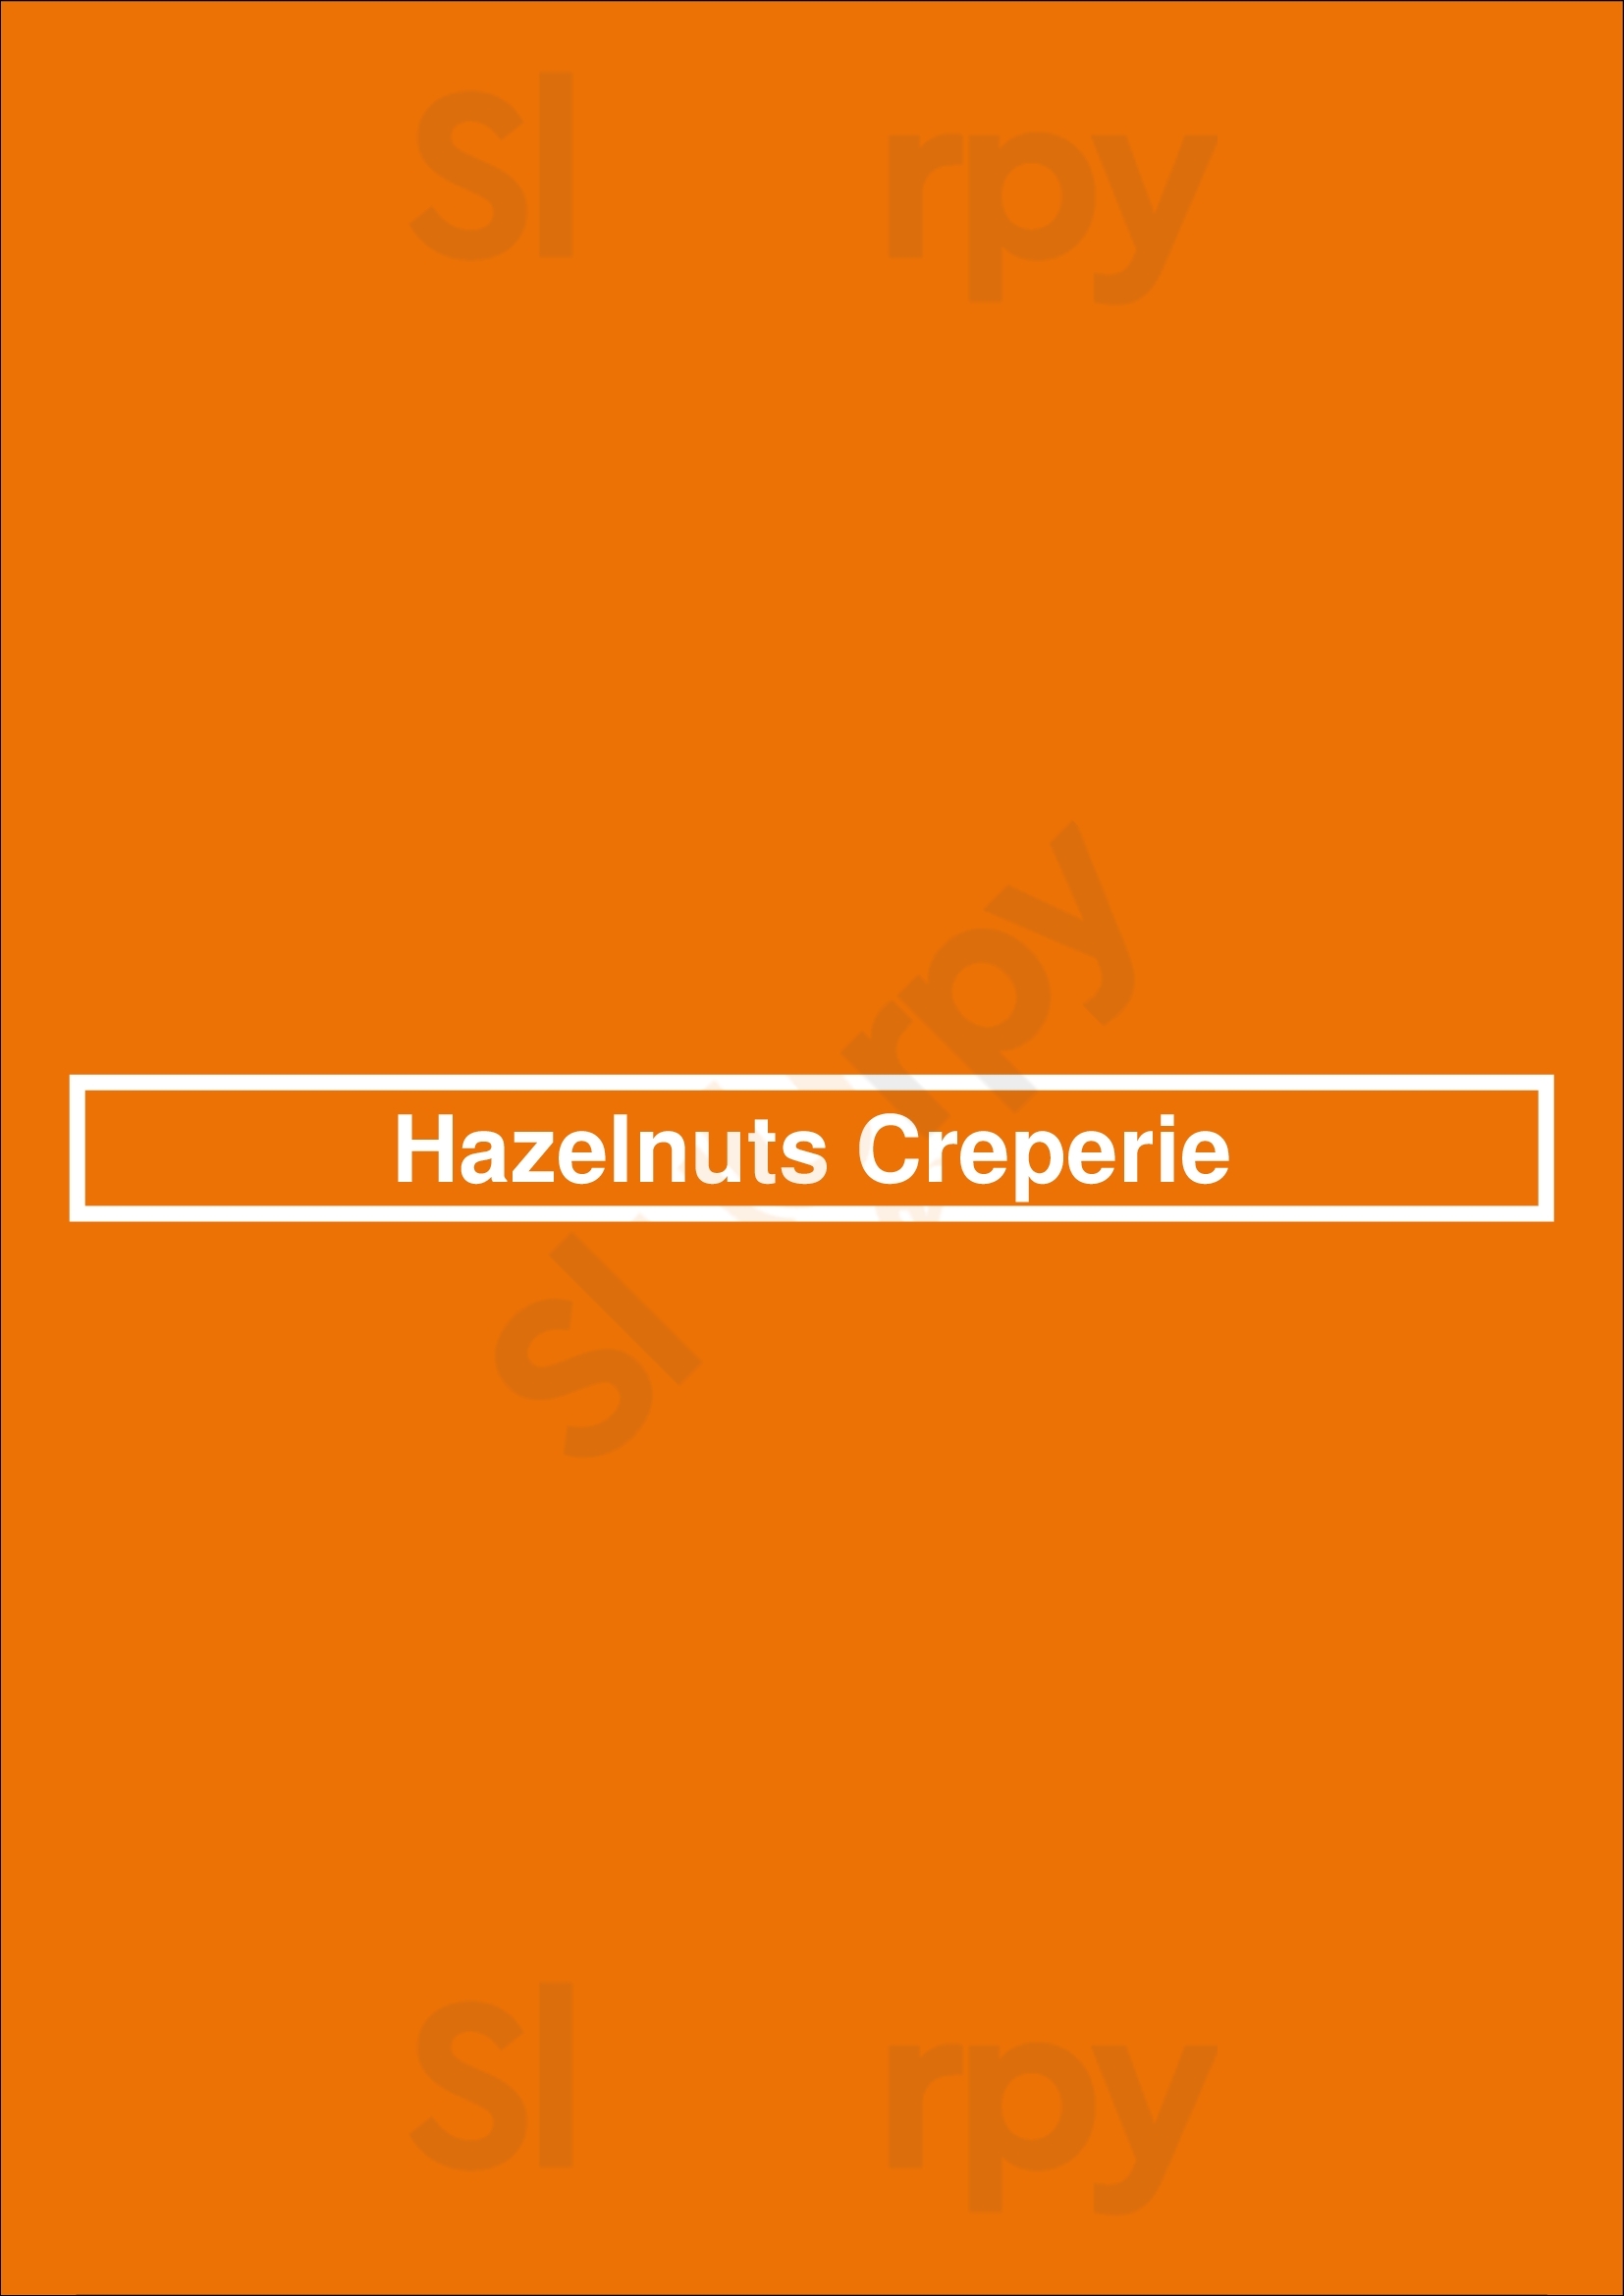 Hazelnuts Creperie Charlotte Menu - 1